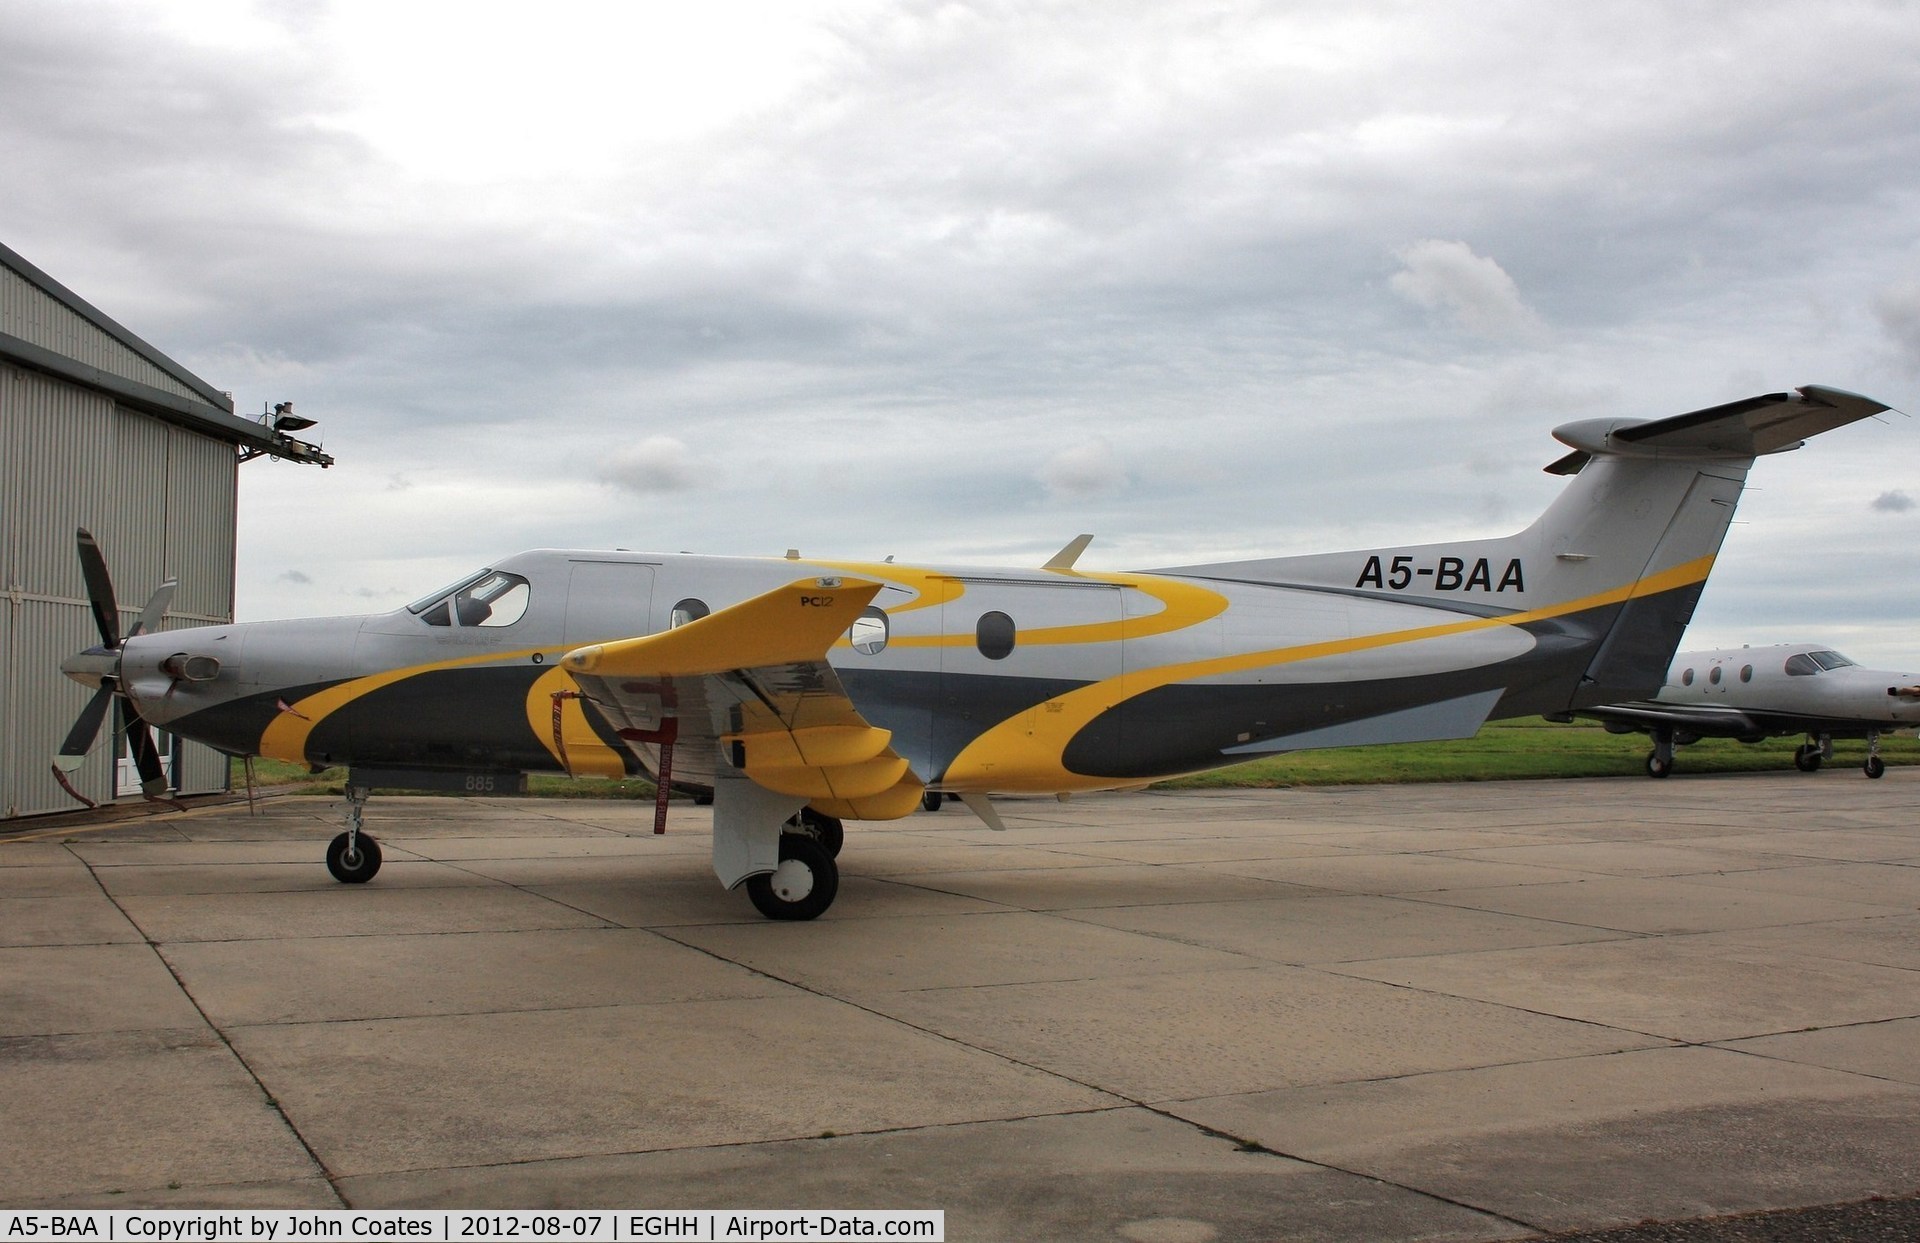 A5-BAA, 2008 Pilatus PC-12/47 C/N 885, Minus titles and logos